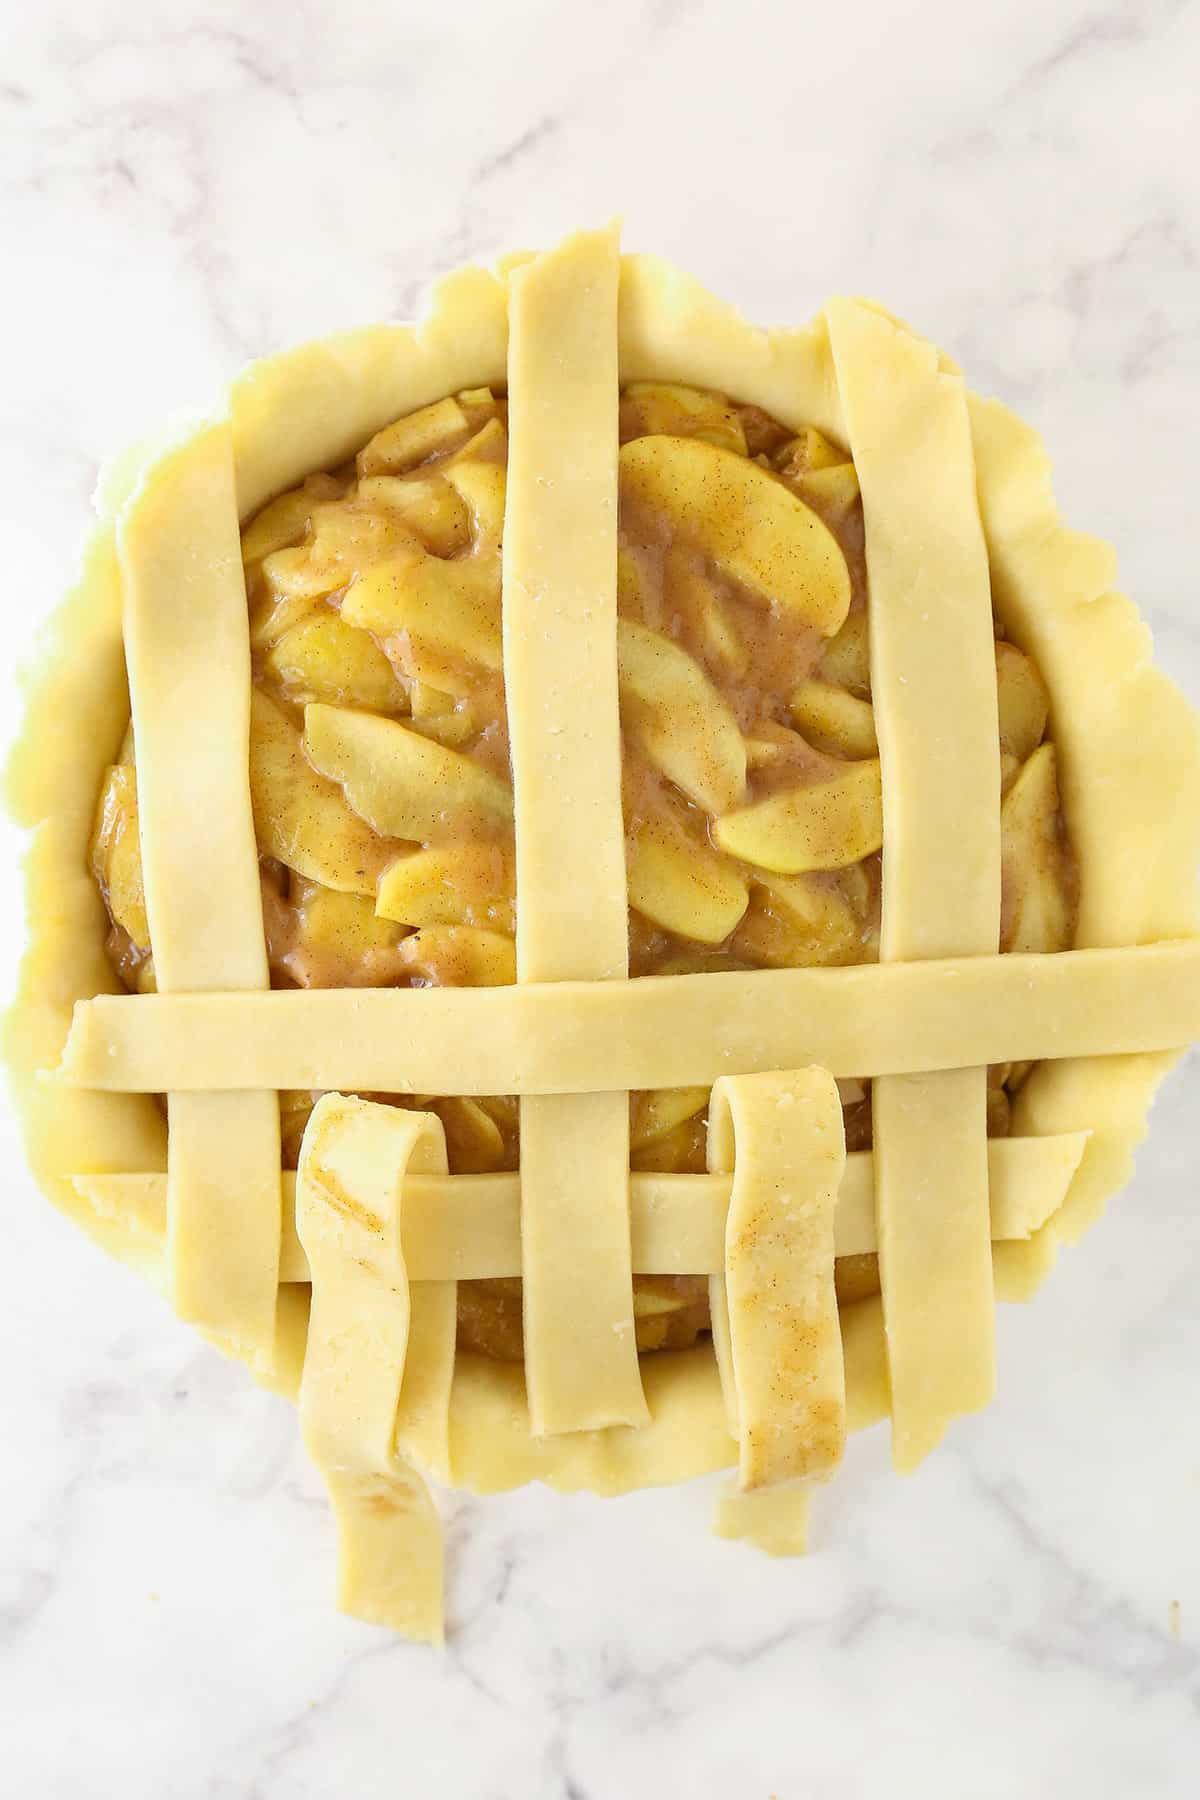 Creating a lattice crust on the apple pie